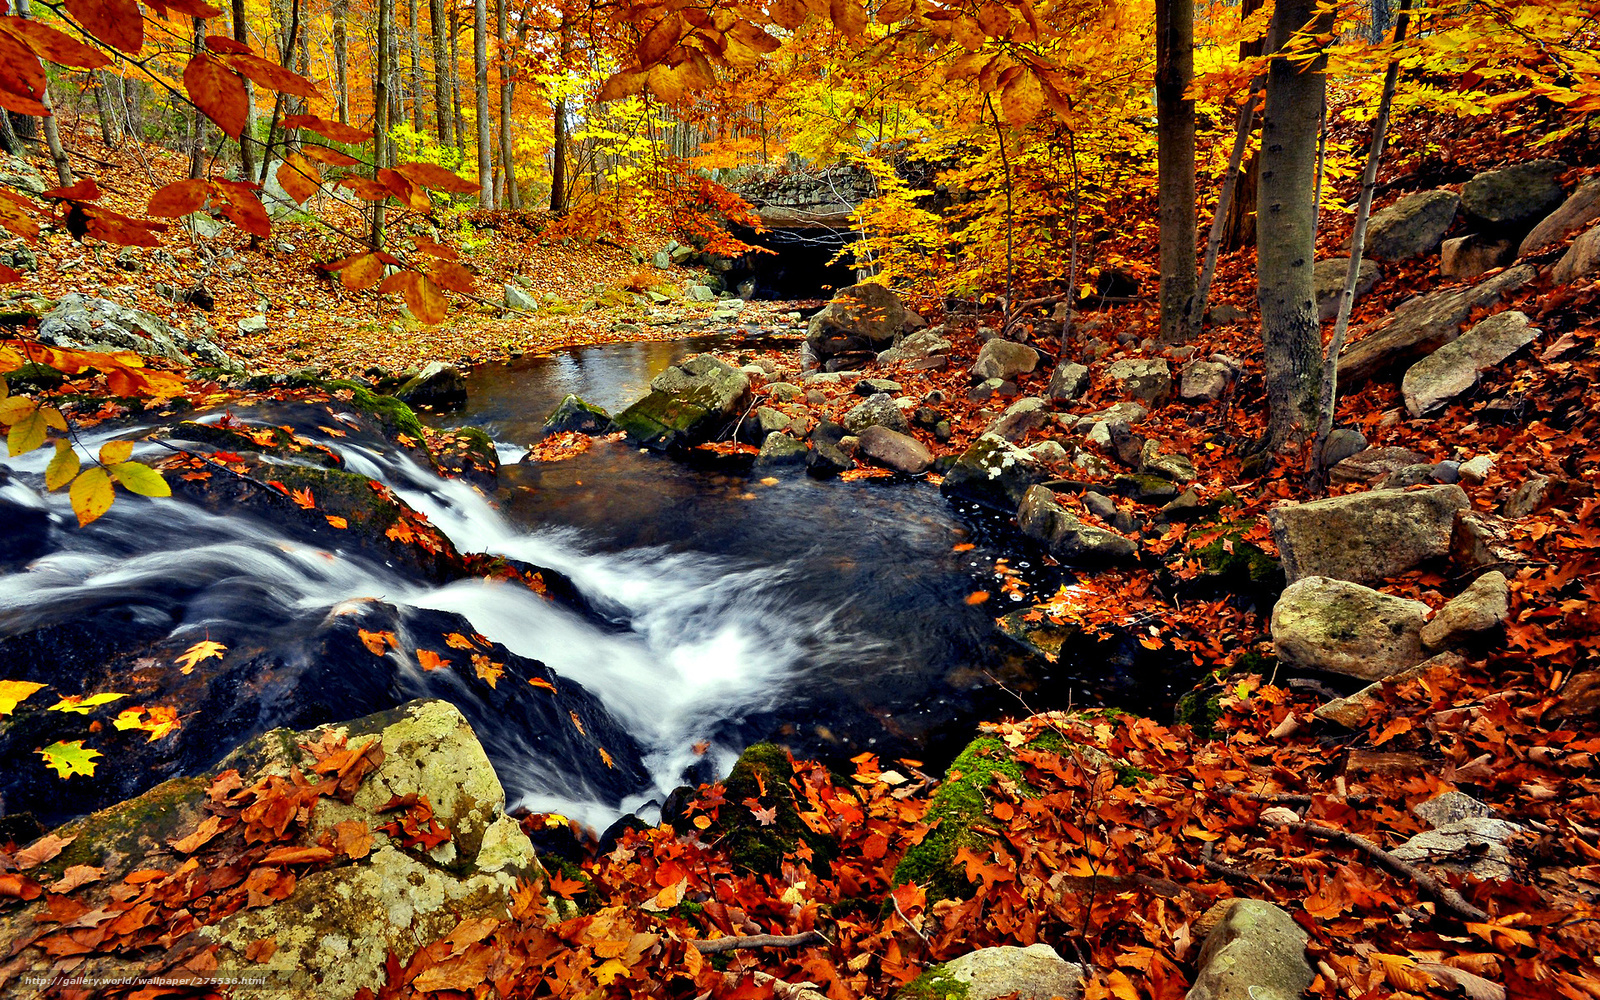 Download wallpaper autumn creek waterfall free desktop wallpaper in